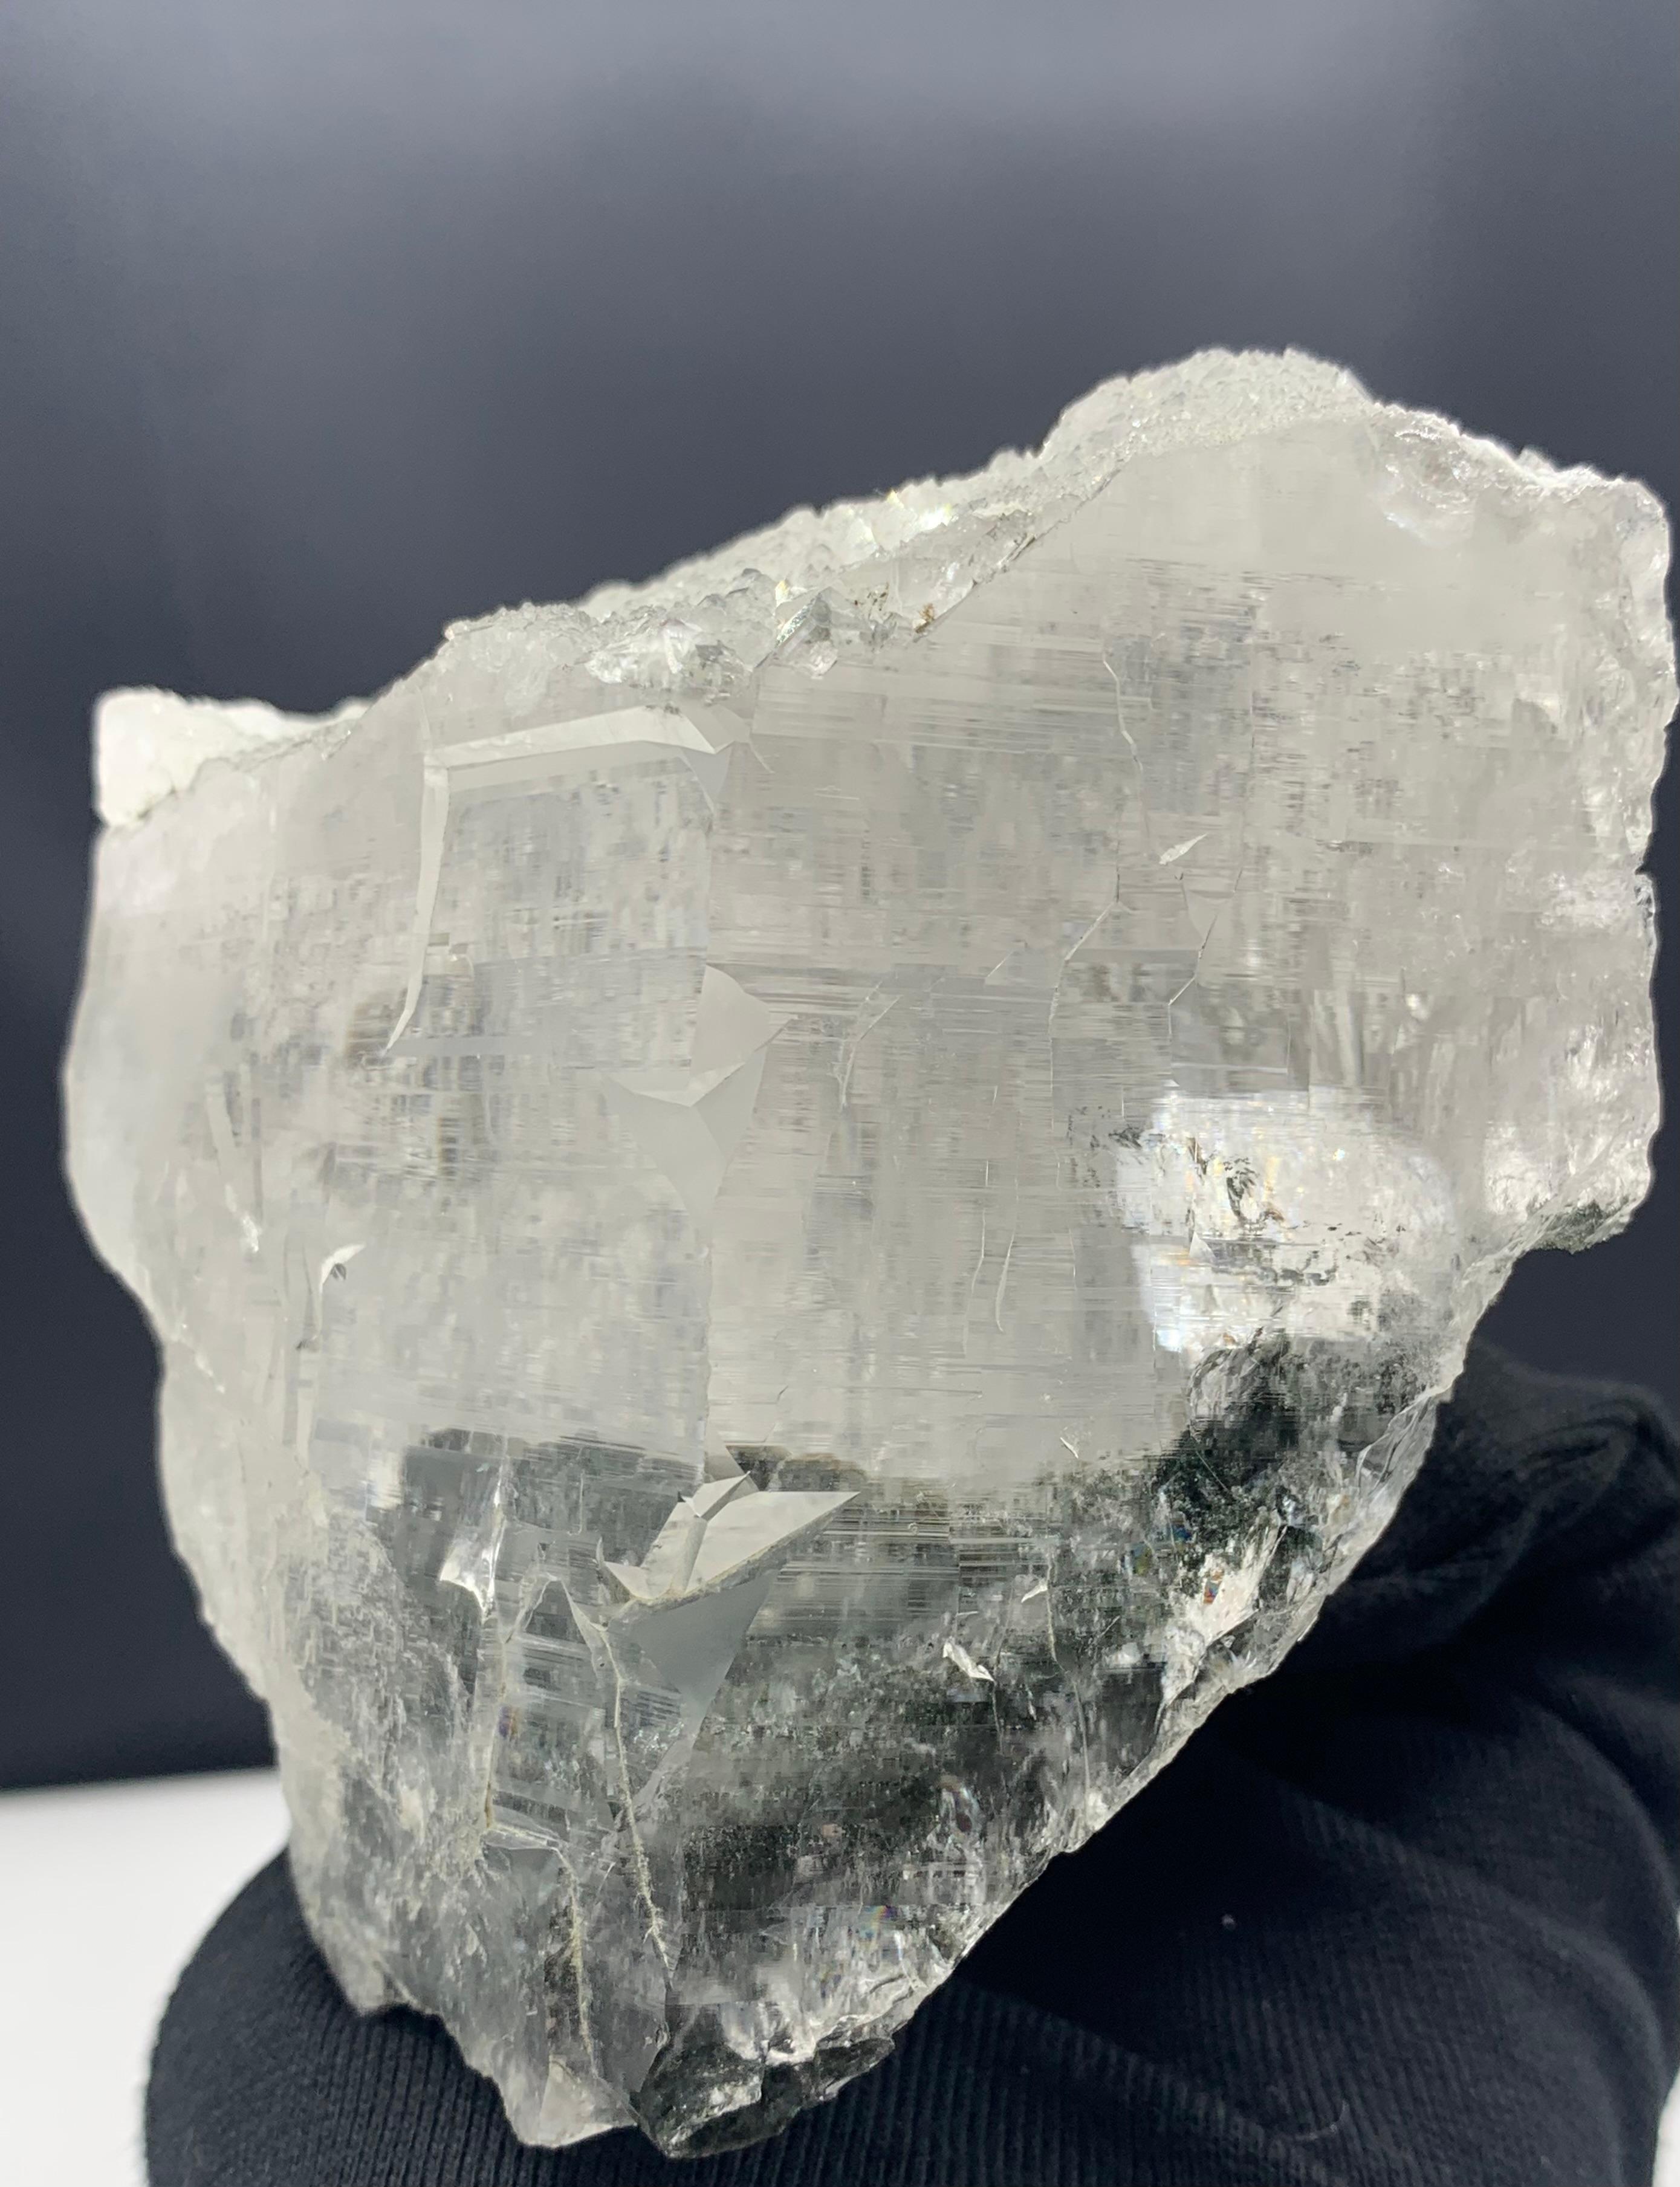 18th Century and Earlier 1017.03 Gram Gigantic Quartz Crystal From Skardu, Pakistan  For Sale